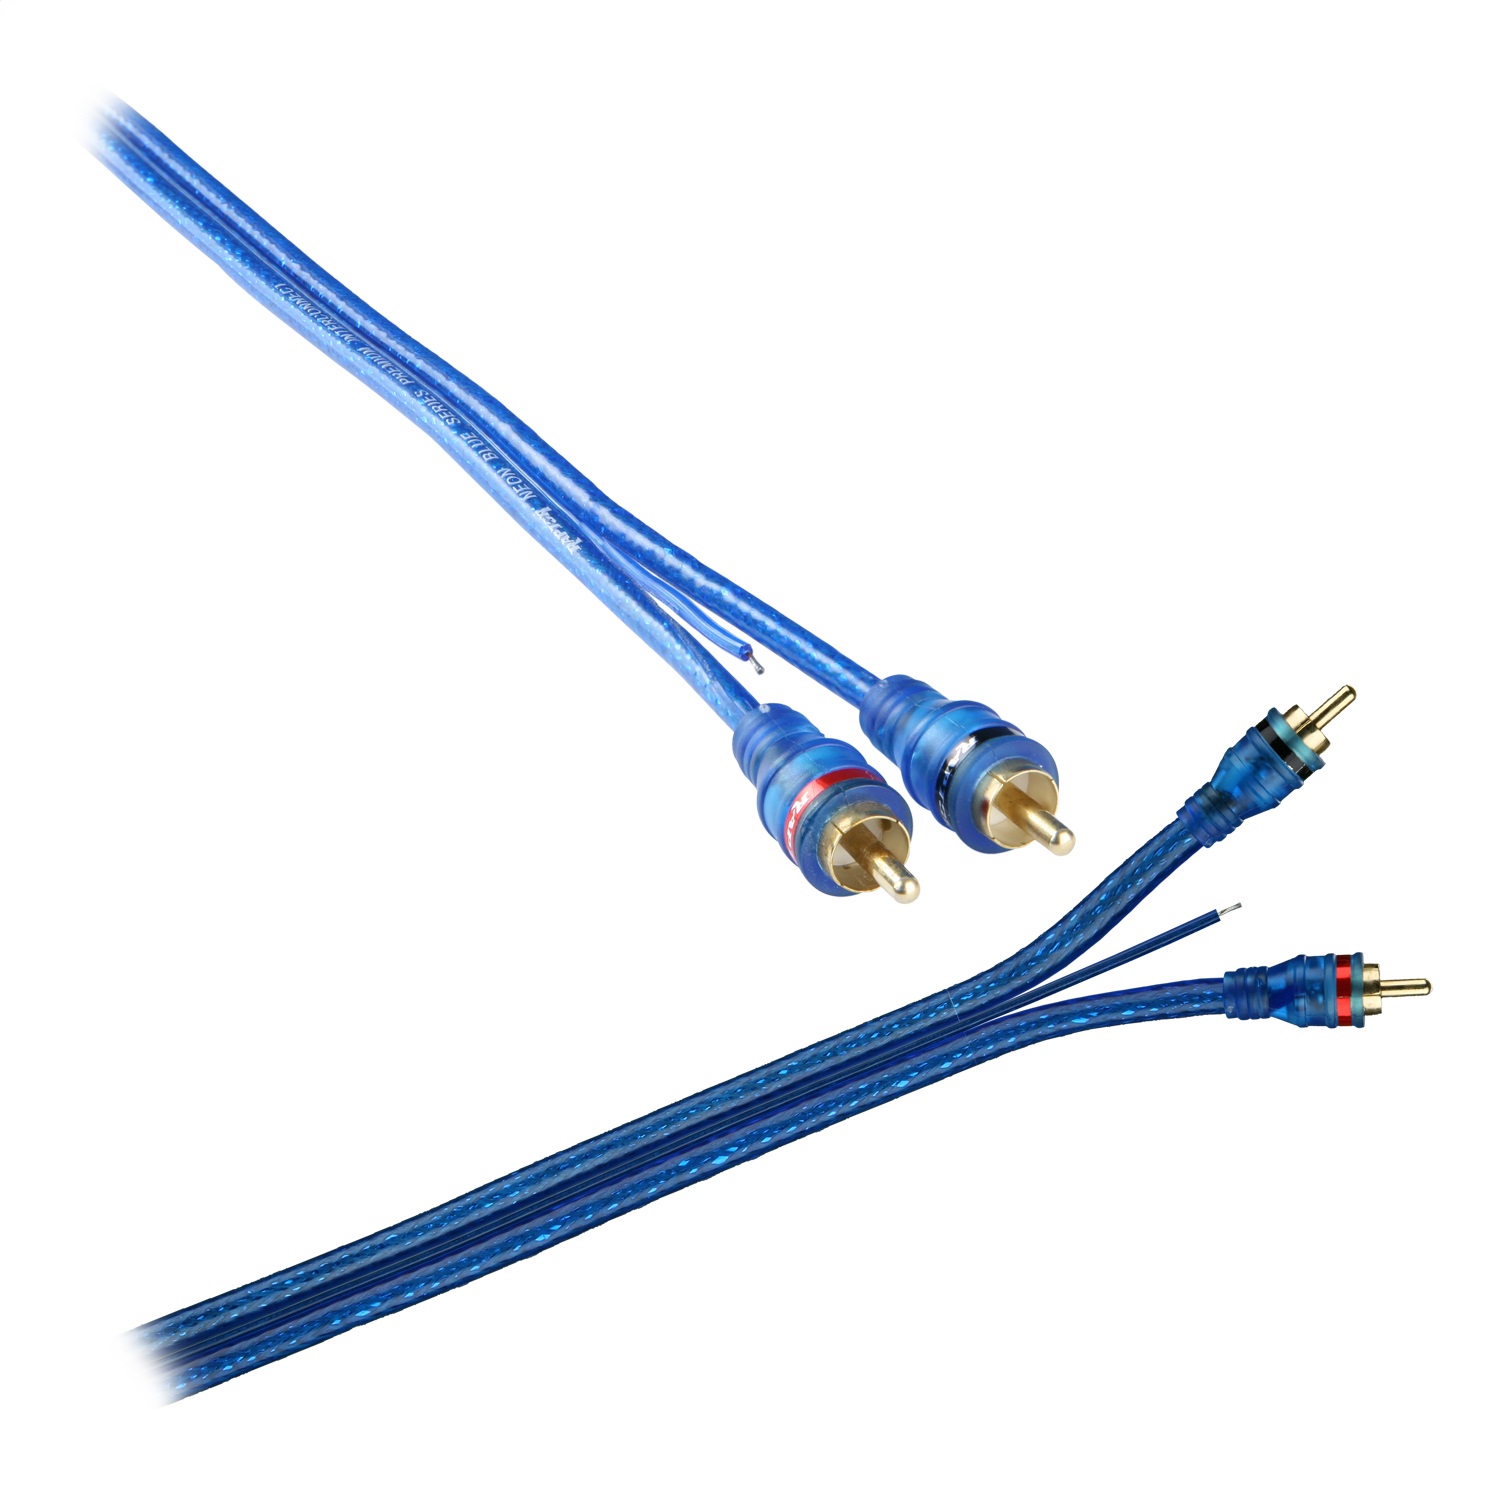 Metra Metra NBRCA-10 RCA Cable Fits